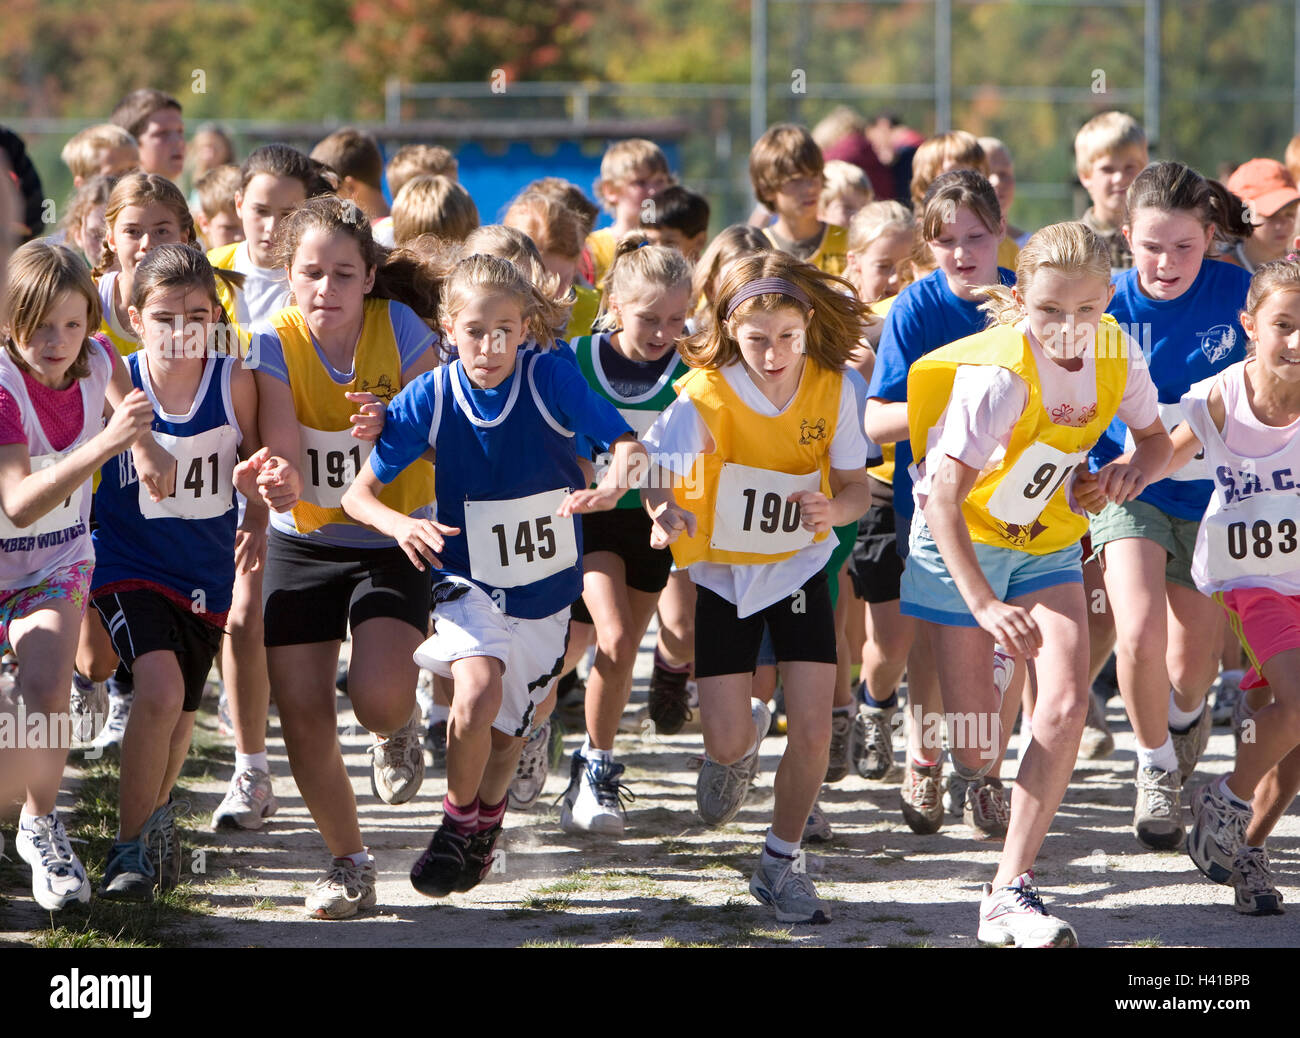 girls running in track meet Stock Photo